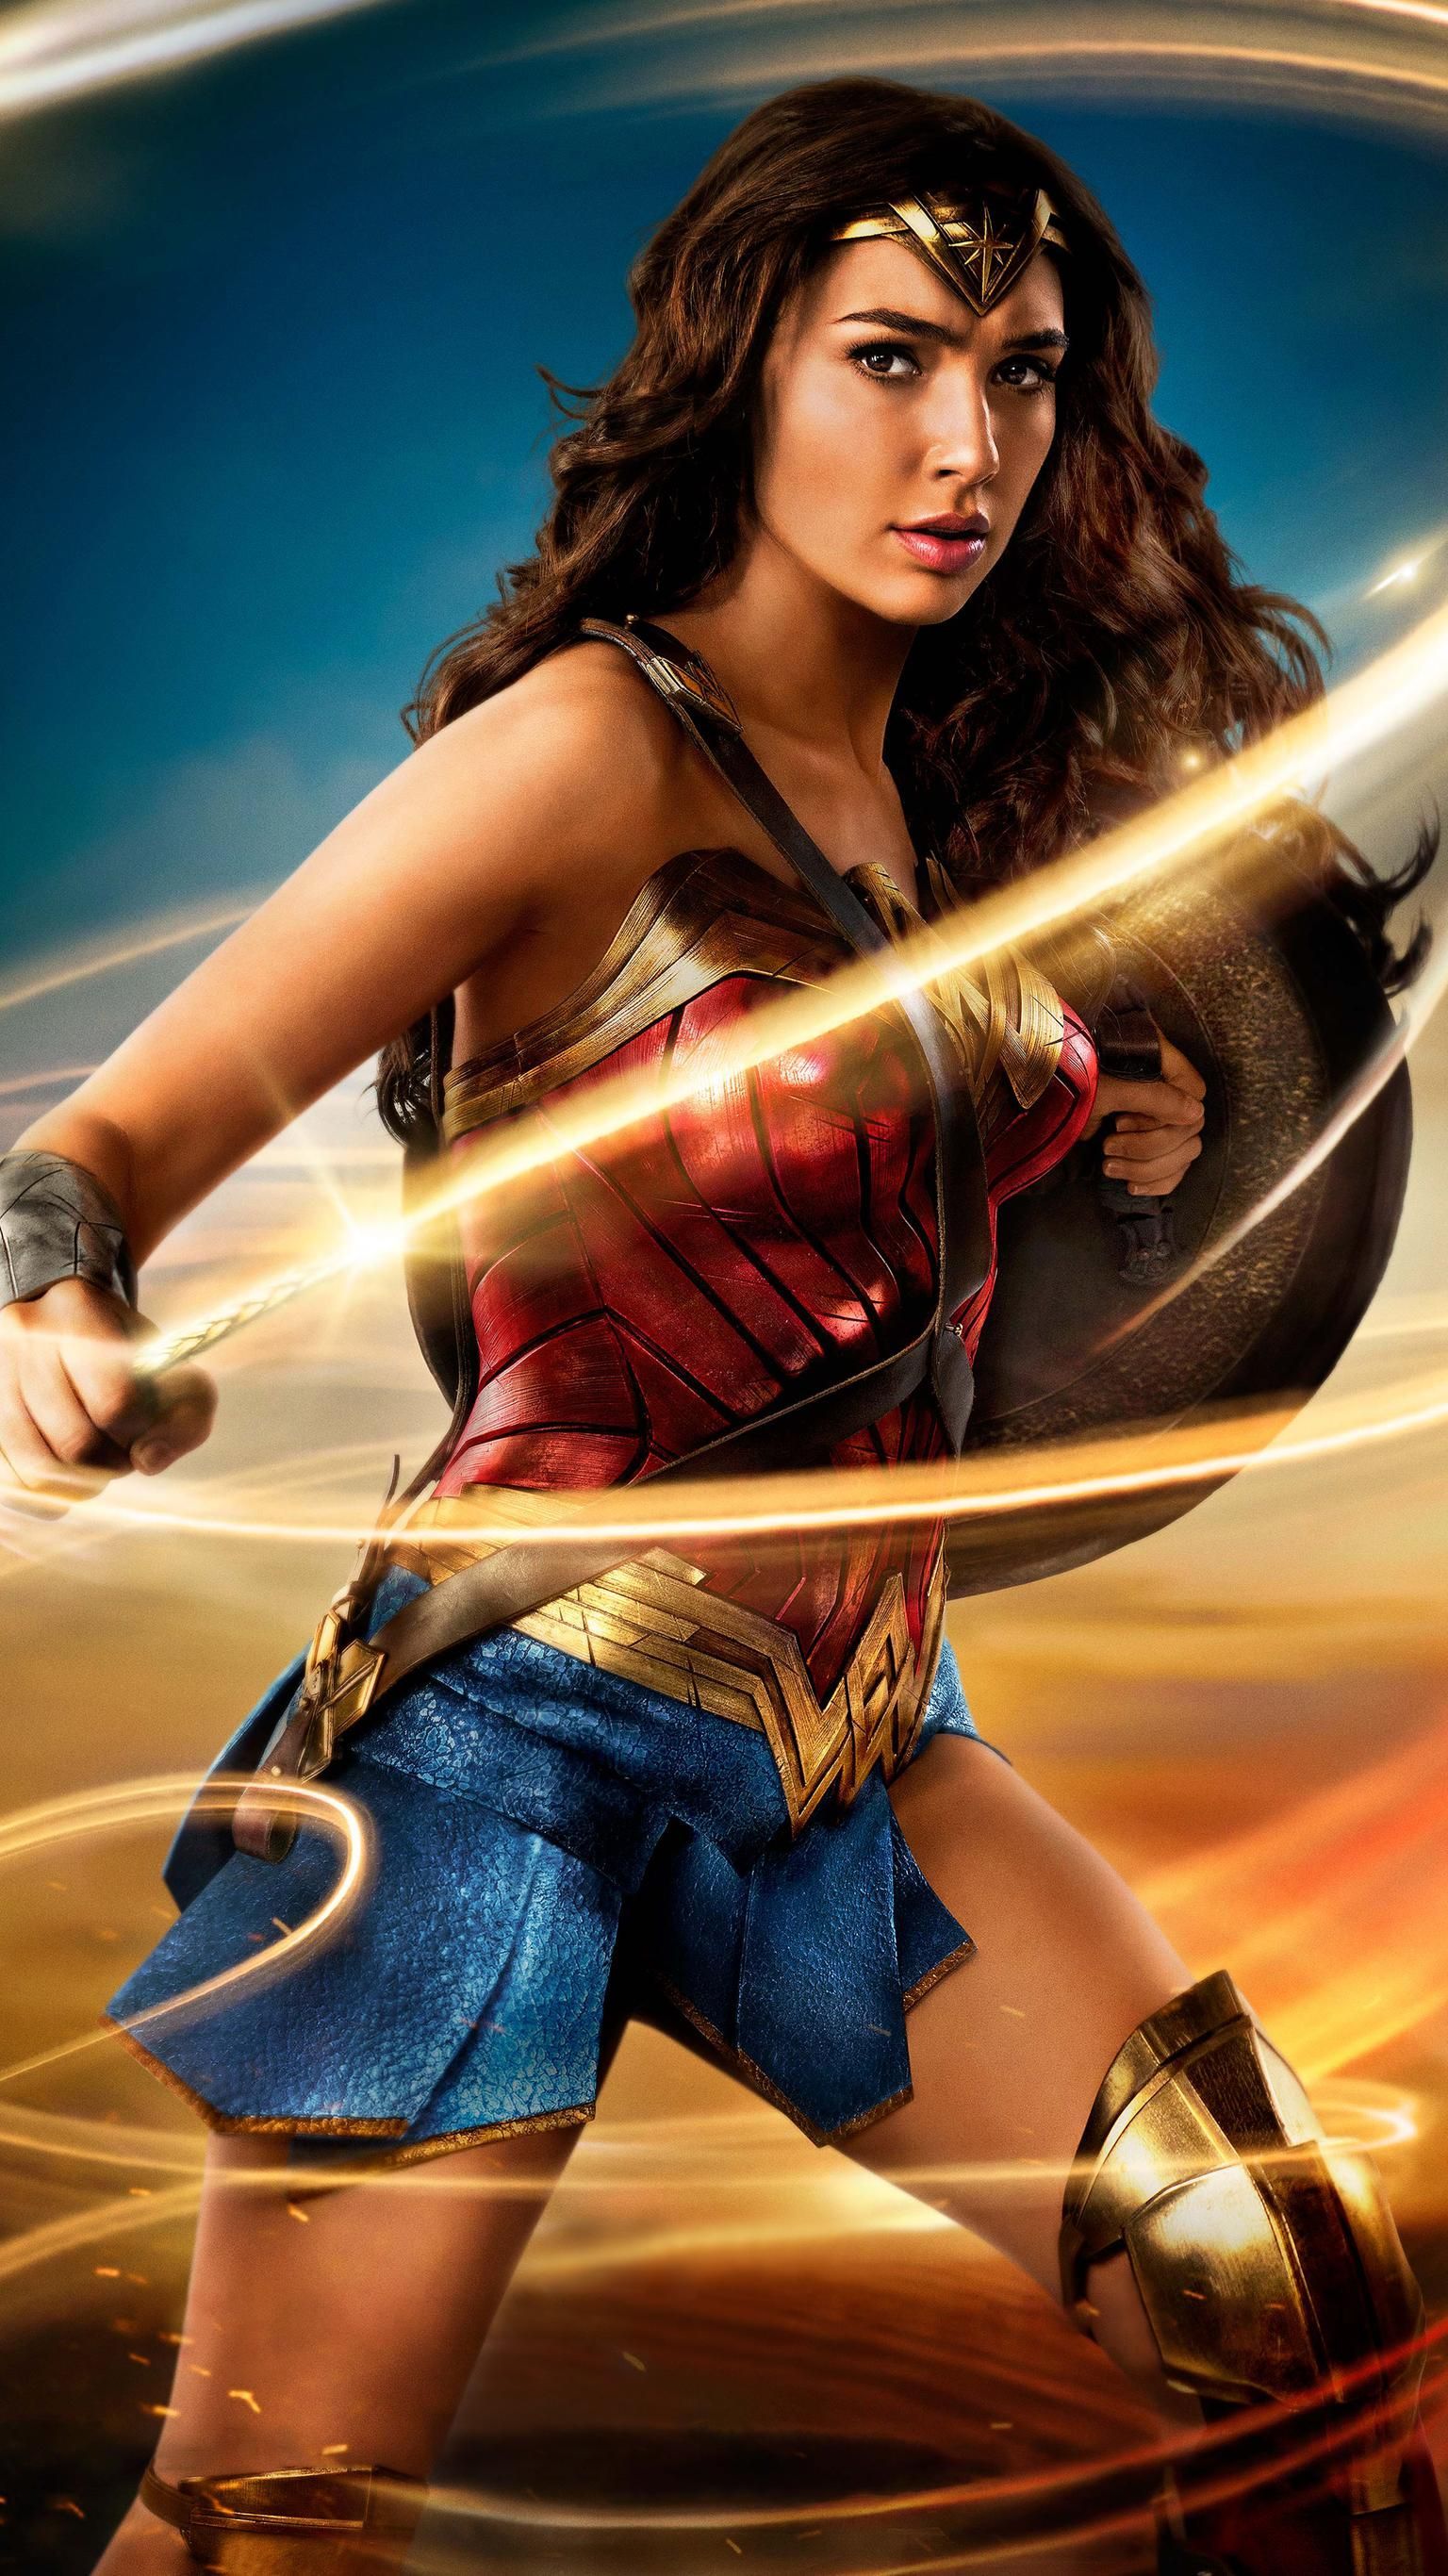 Wonder Woman (2017) Phone Wallpaper. Moviemania. Wonder woman movie, Gal gadot wonder woman, Wonder woman